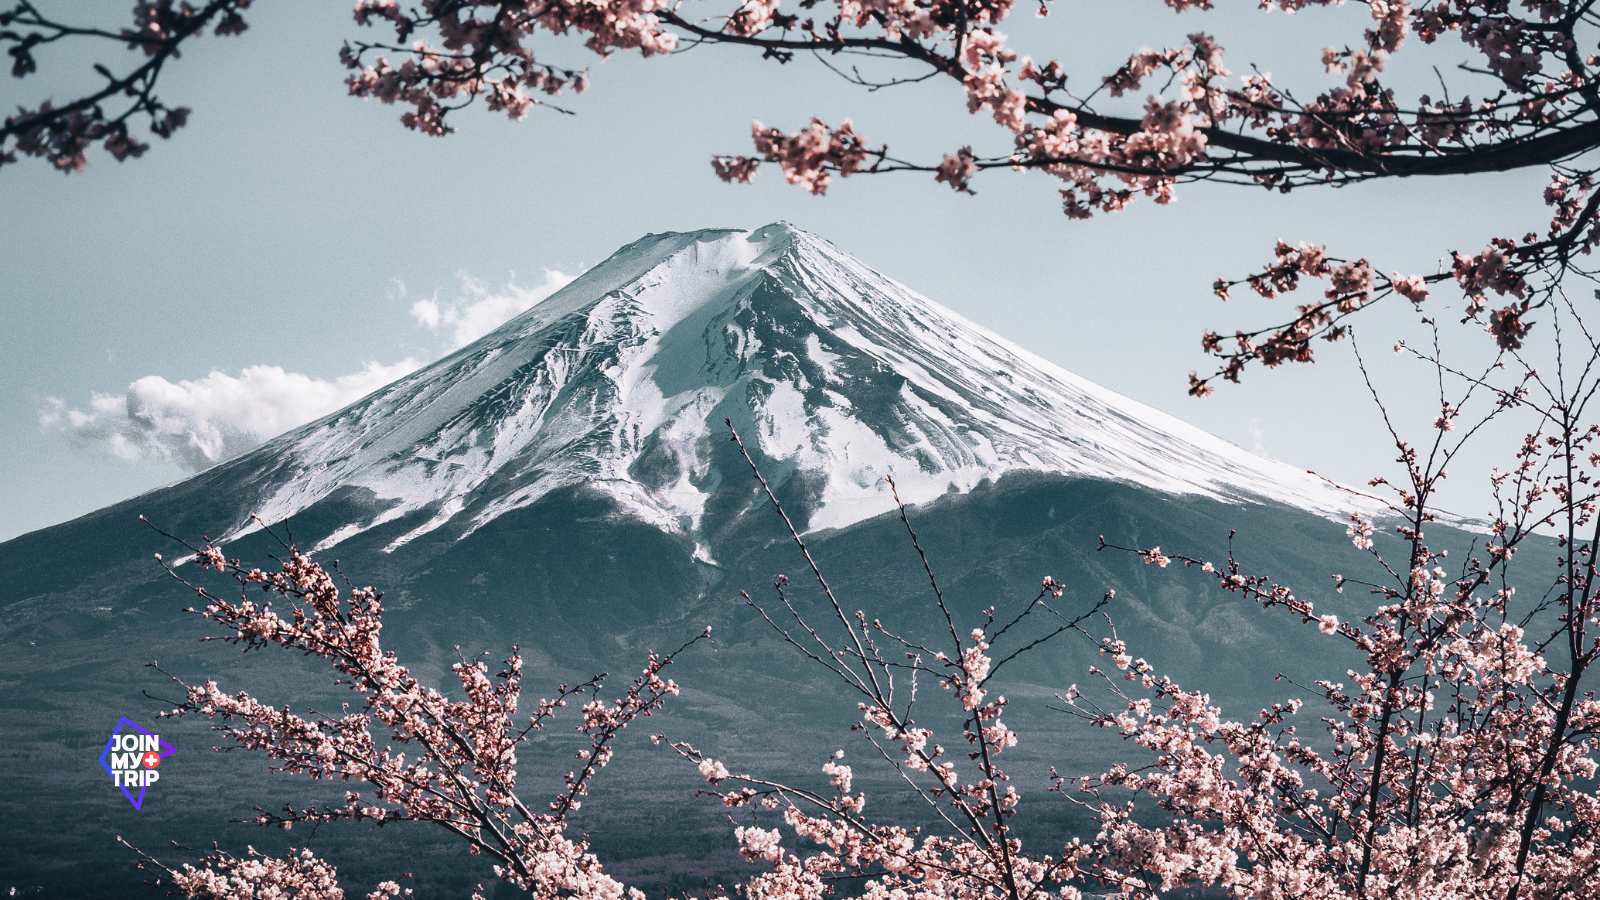 Mount Fuji, Japan [Twitter]